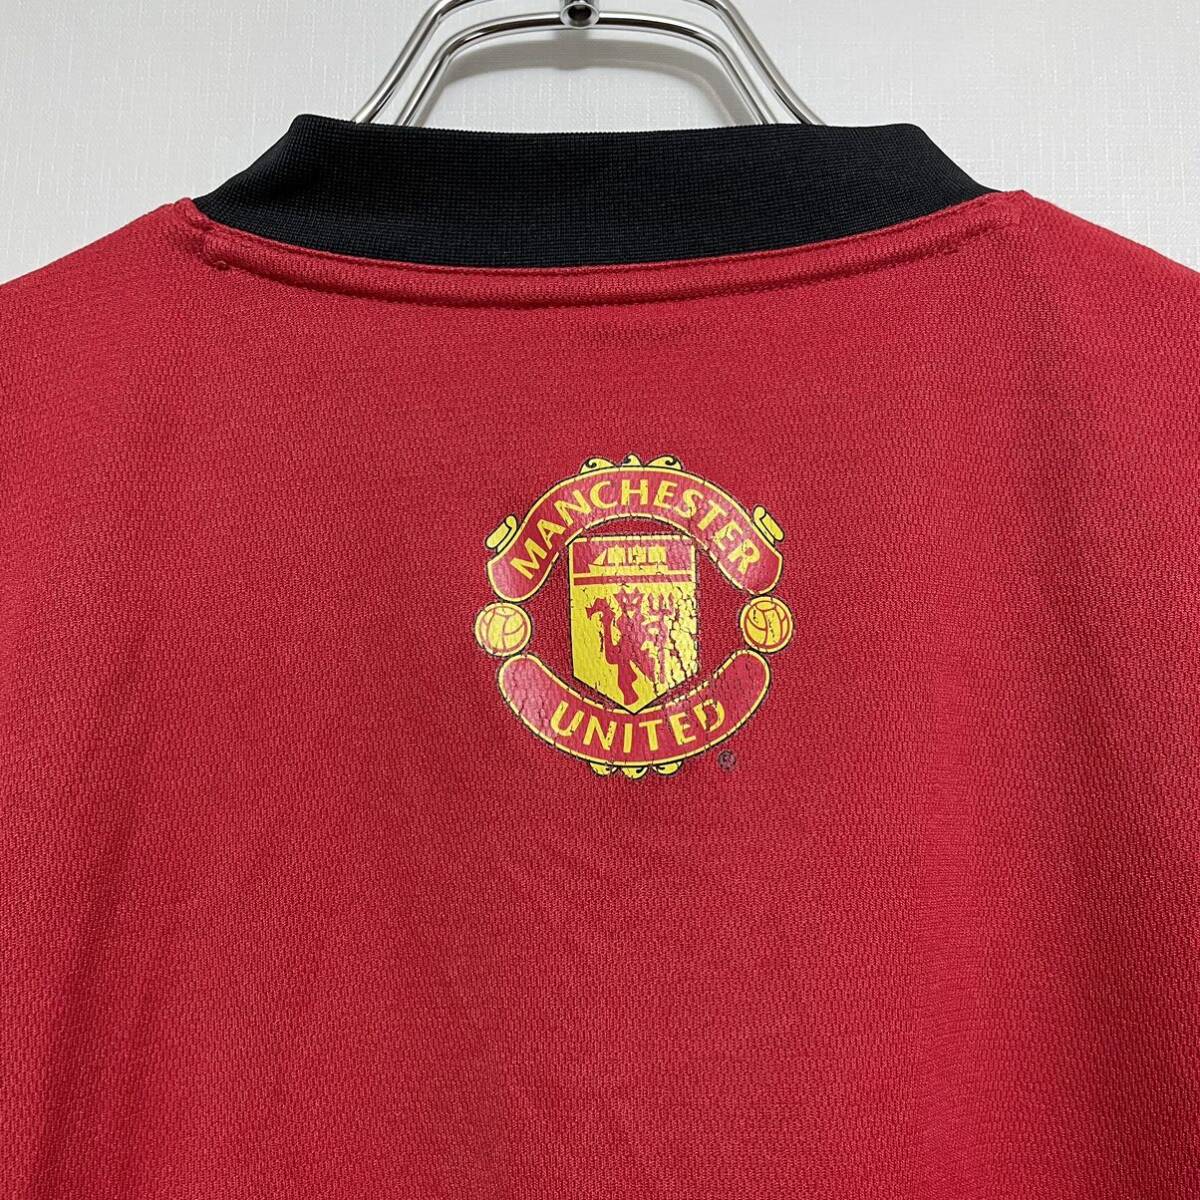 Manchester United Official Merchandise マンチェスターユナイテッド 半袖Tシャツ Mサイズ 赤 Vネック_画像5